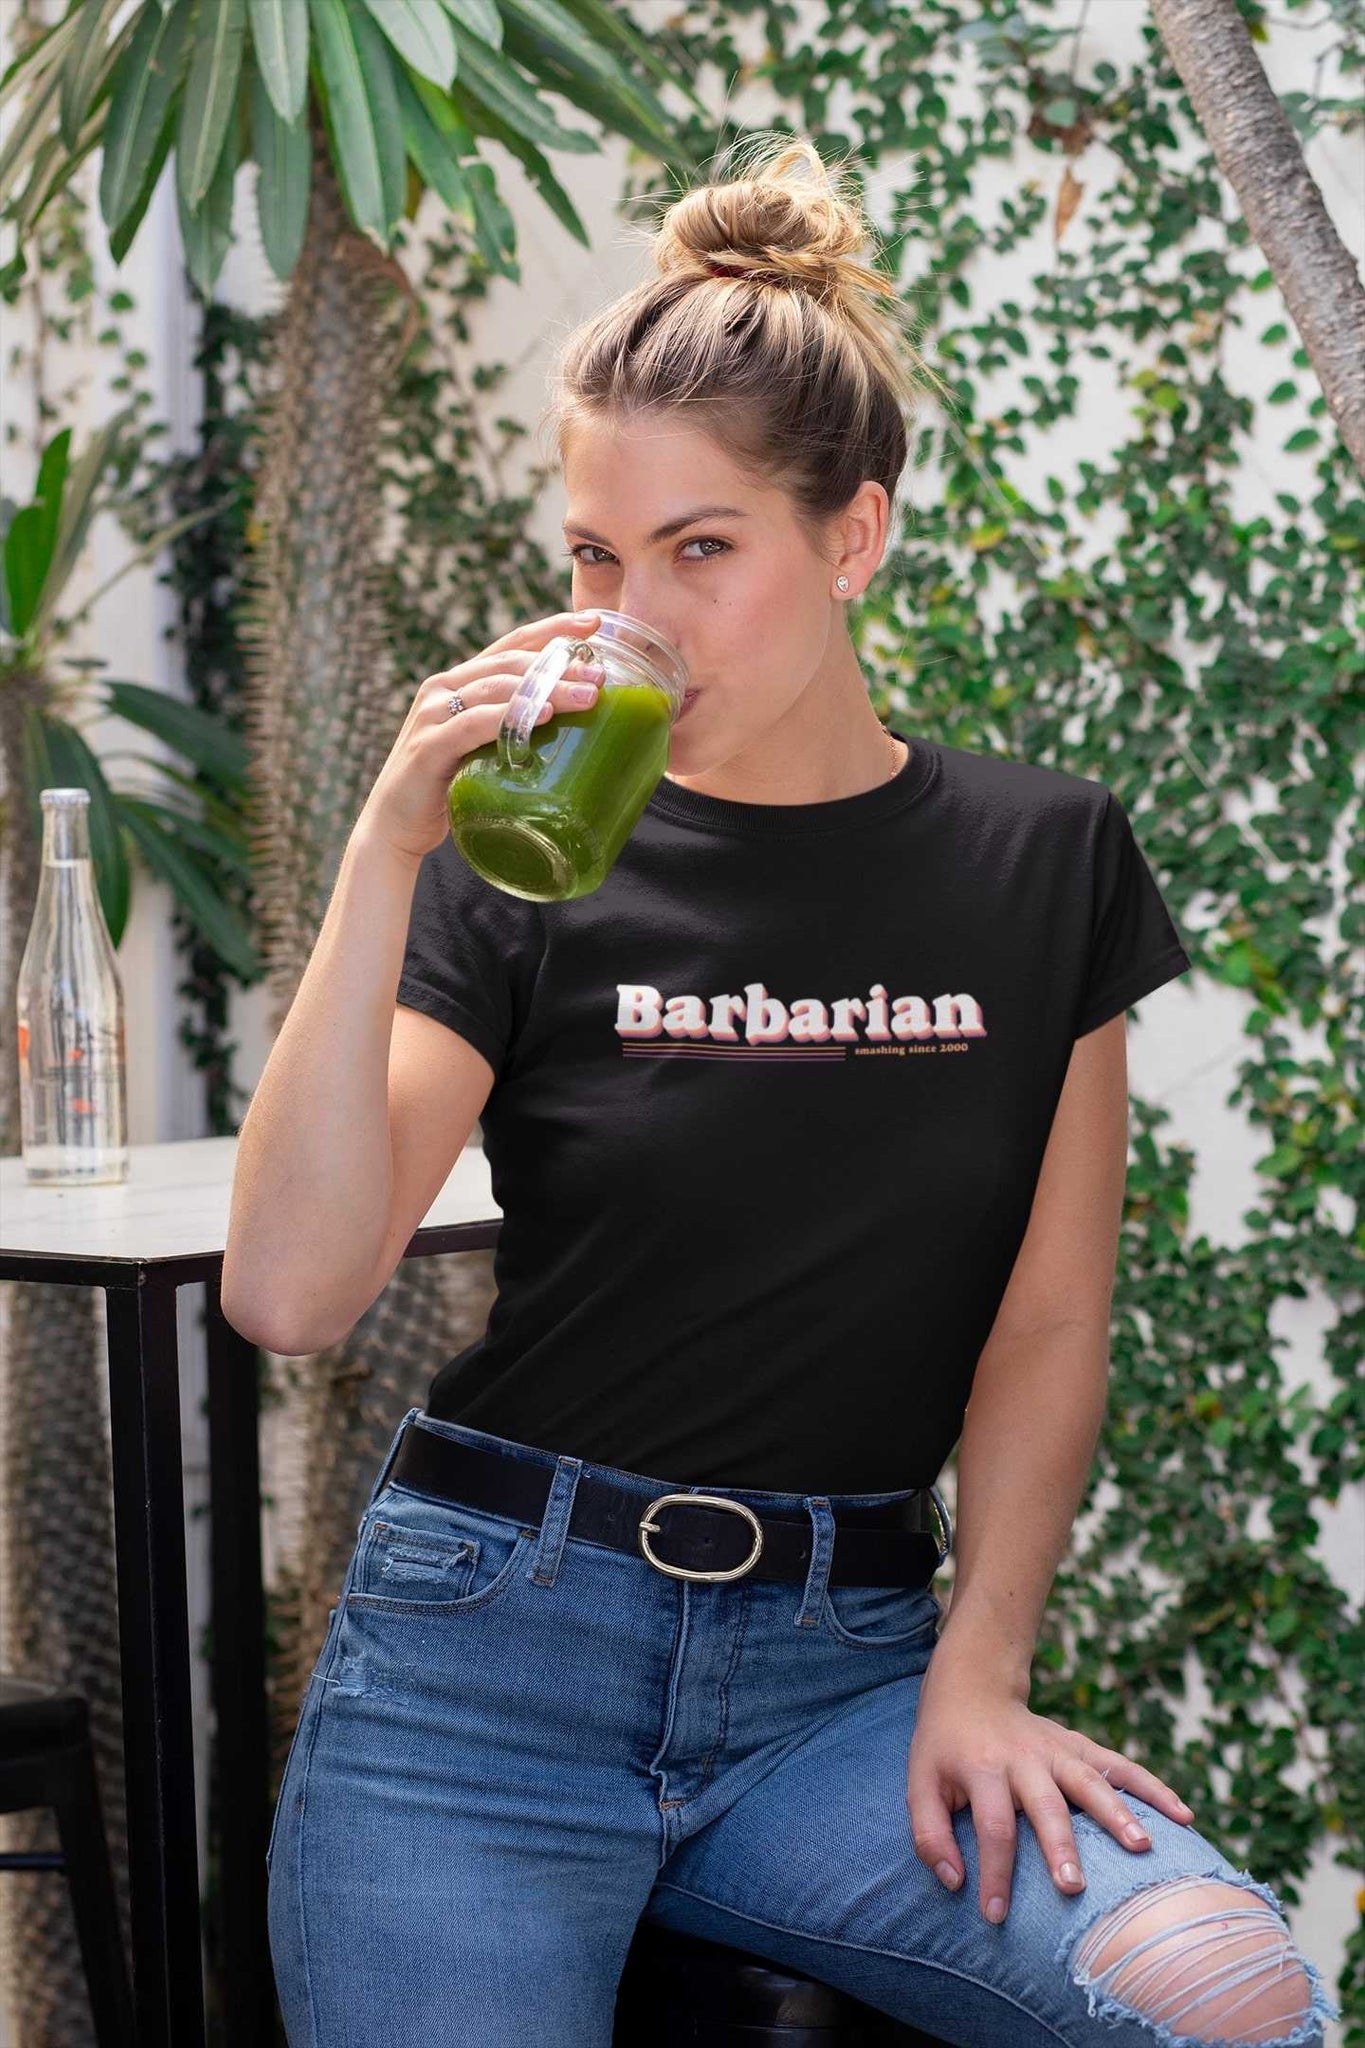 Barbarian Women's Scoopneck T-shirt